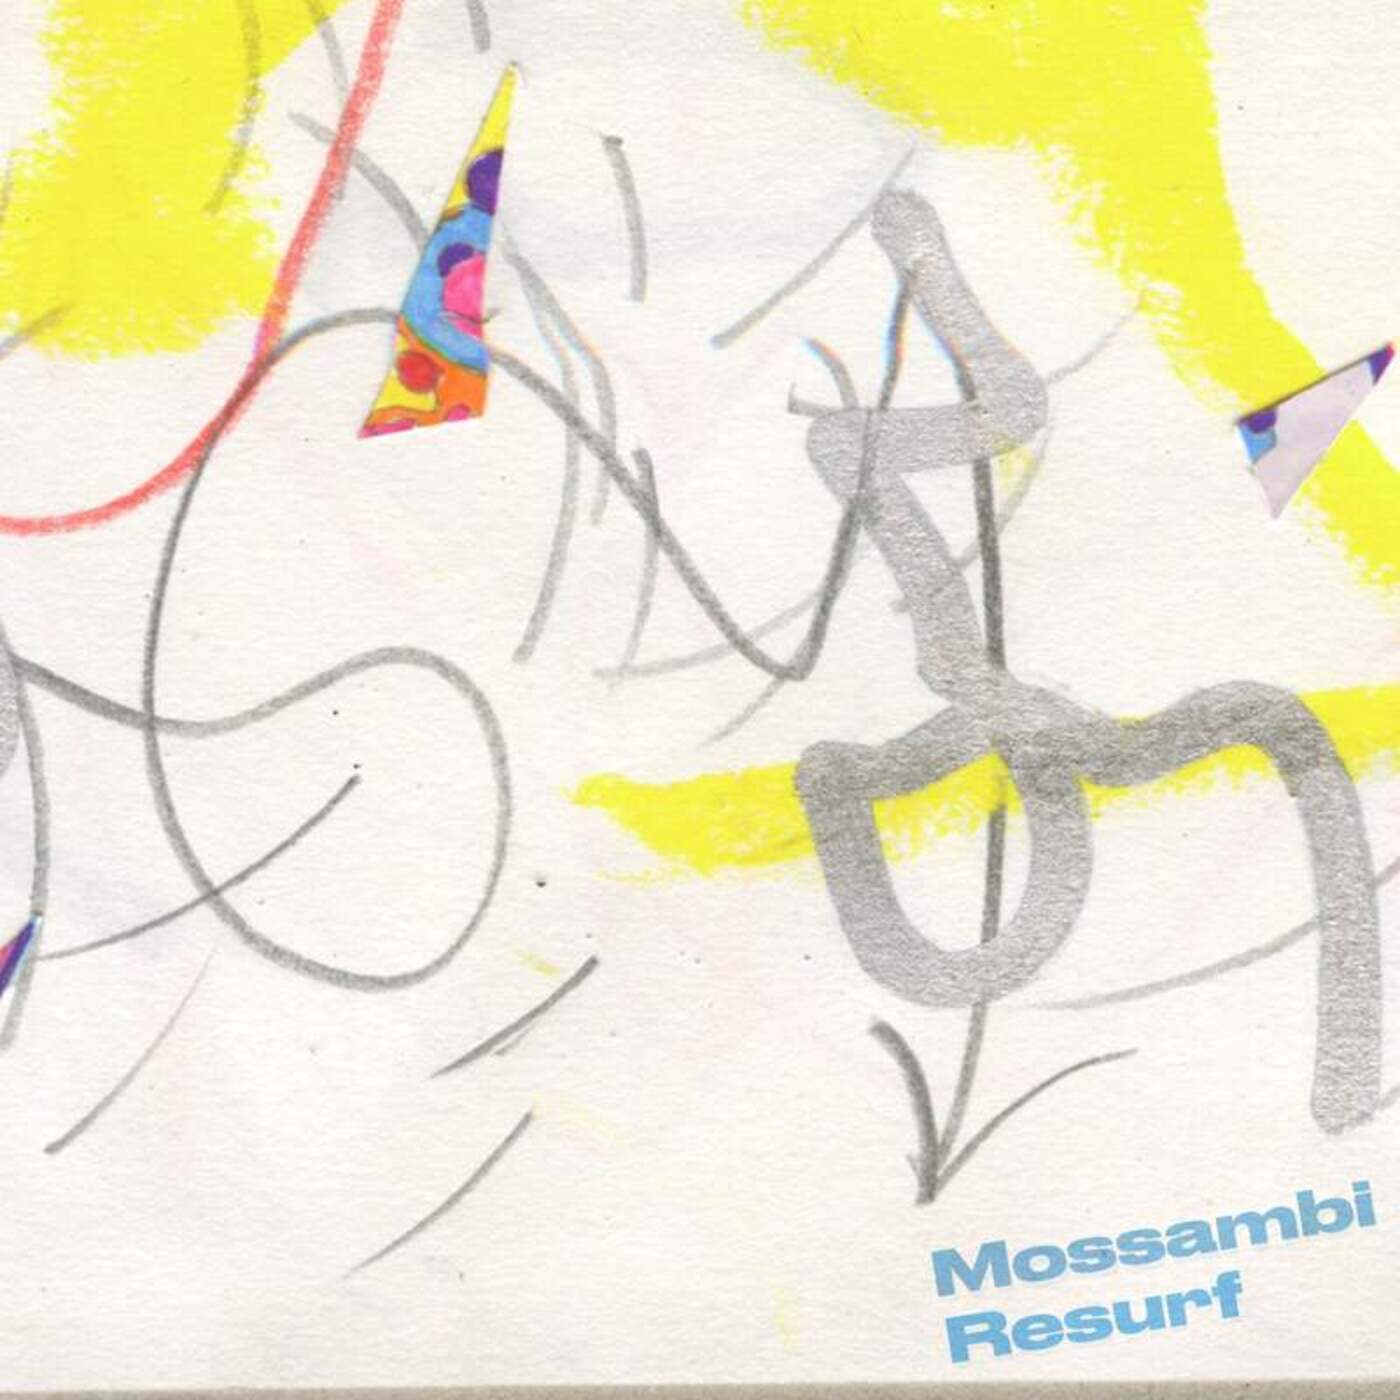 Download Mossambi - Resurf on Electrobuzz